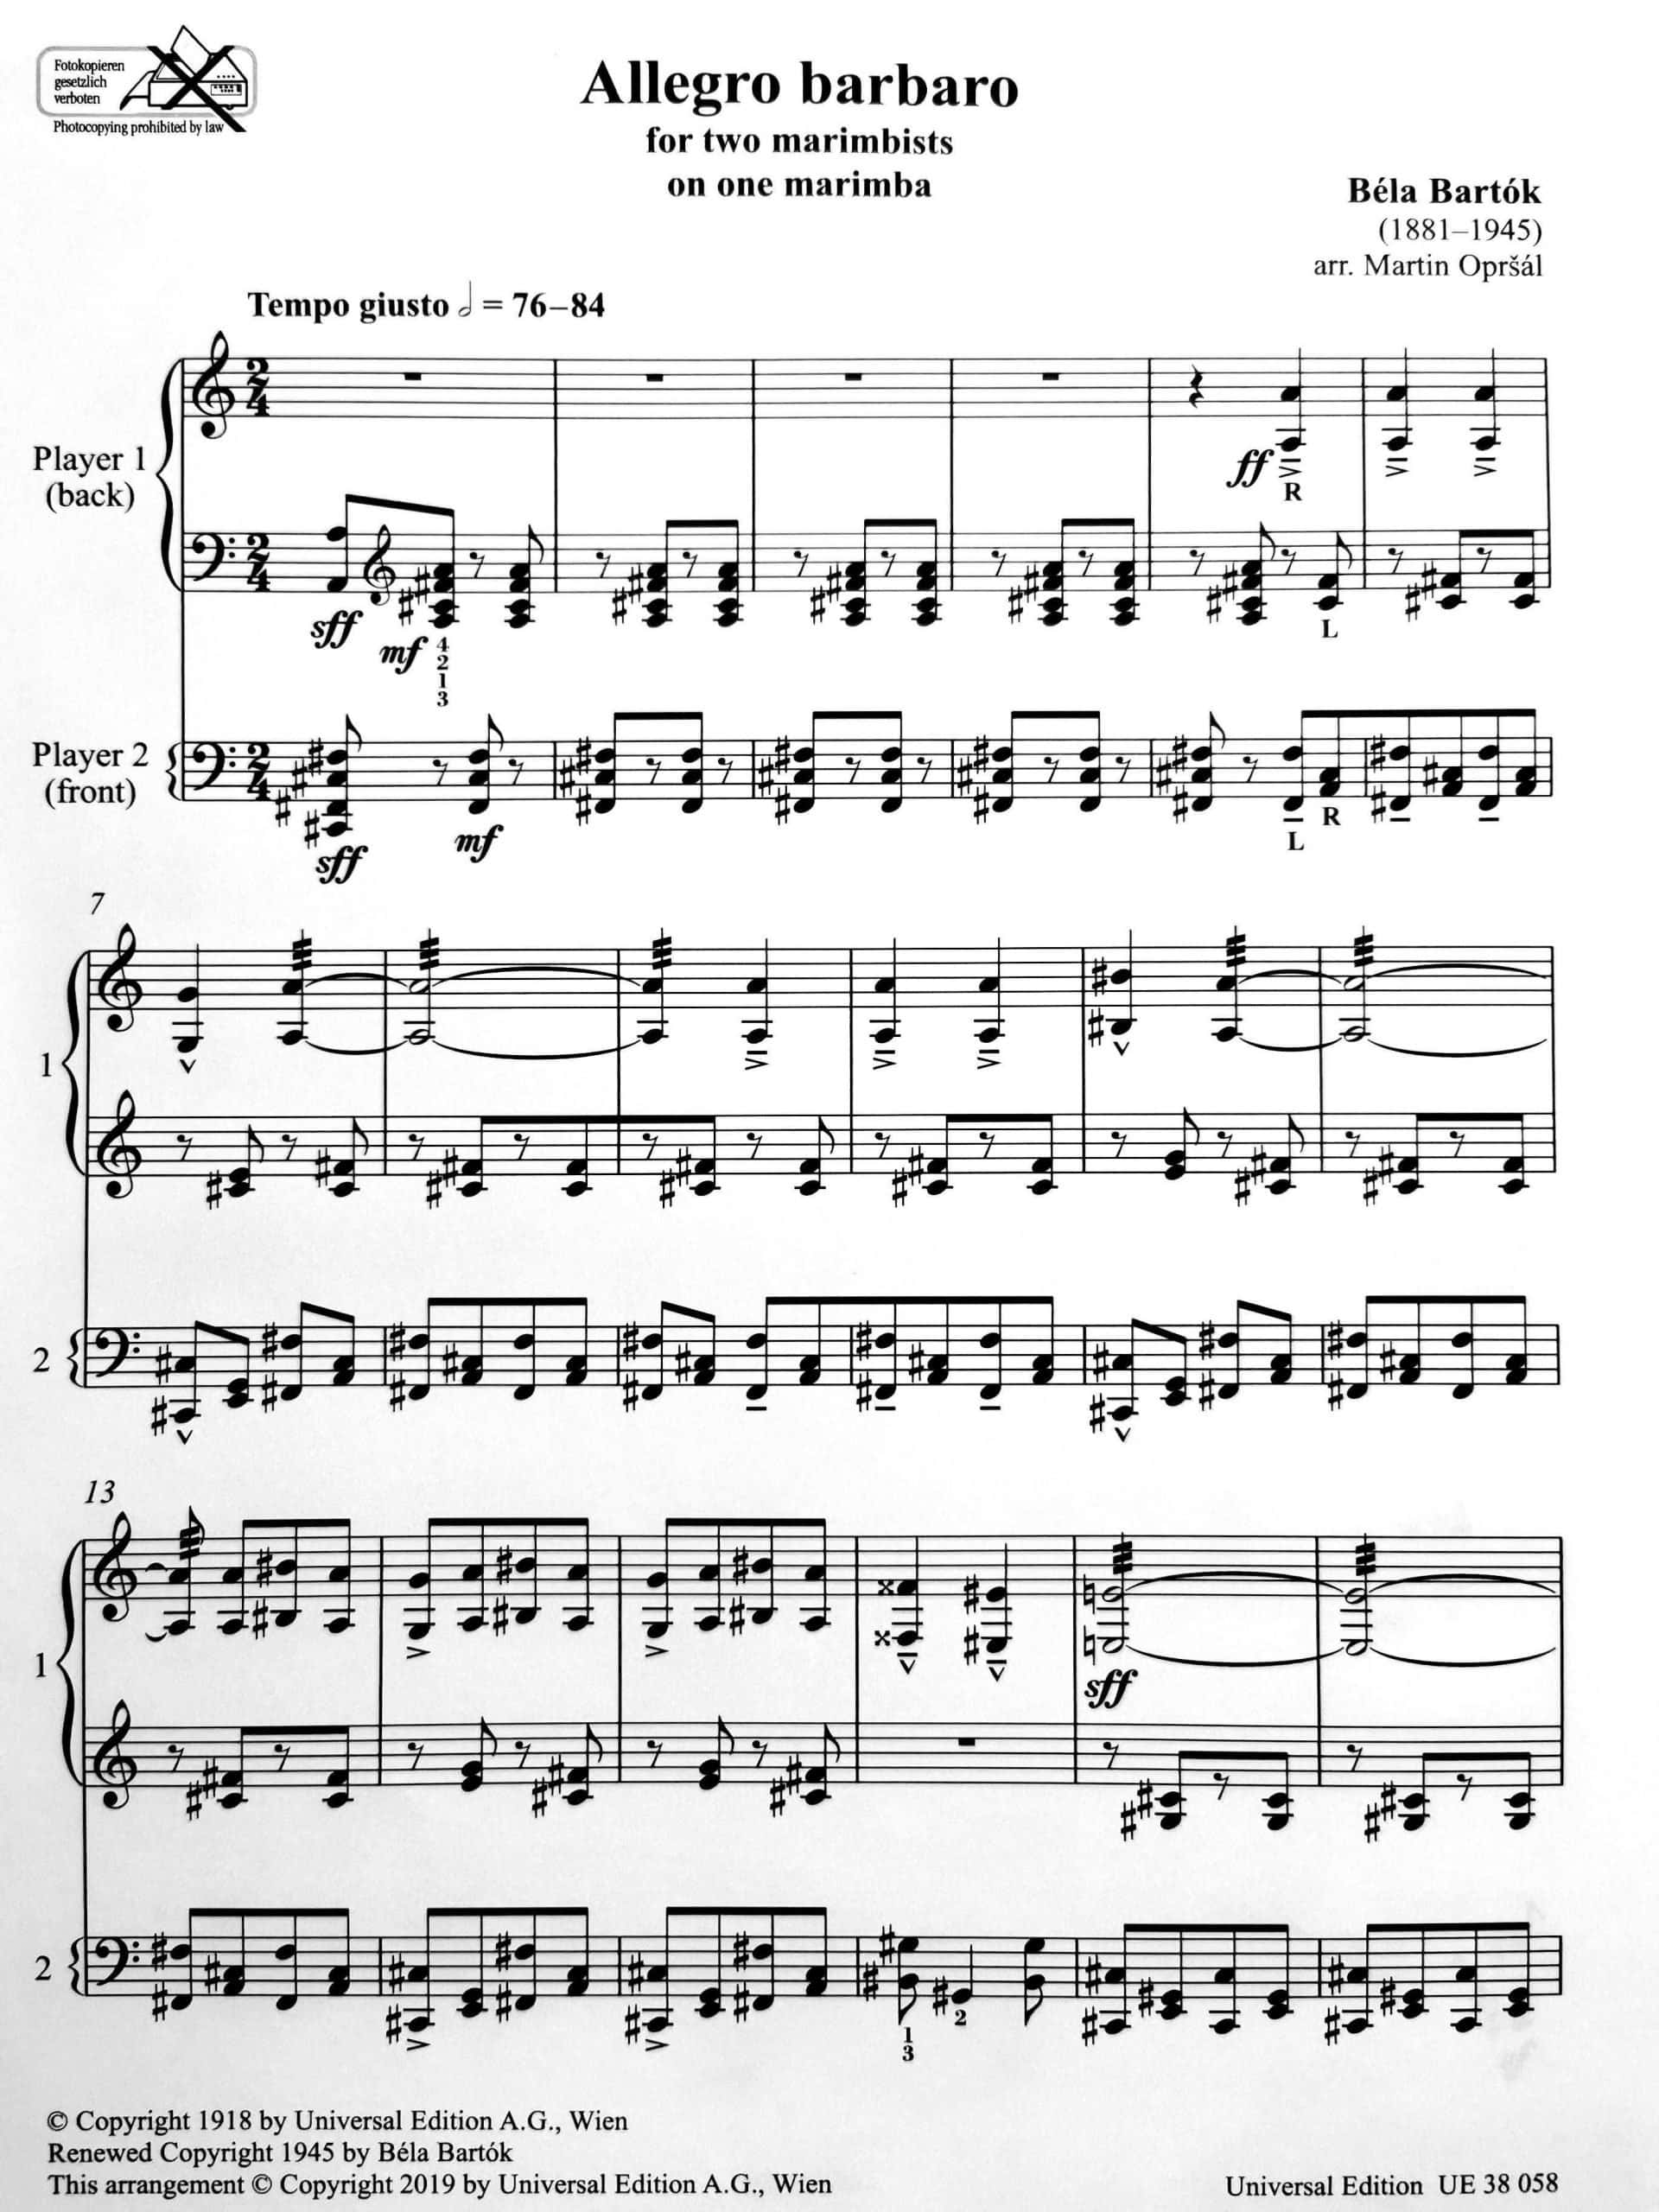 Allegro Barbaro by Bartok arr. Martin Oprsal